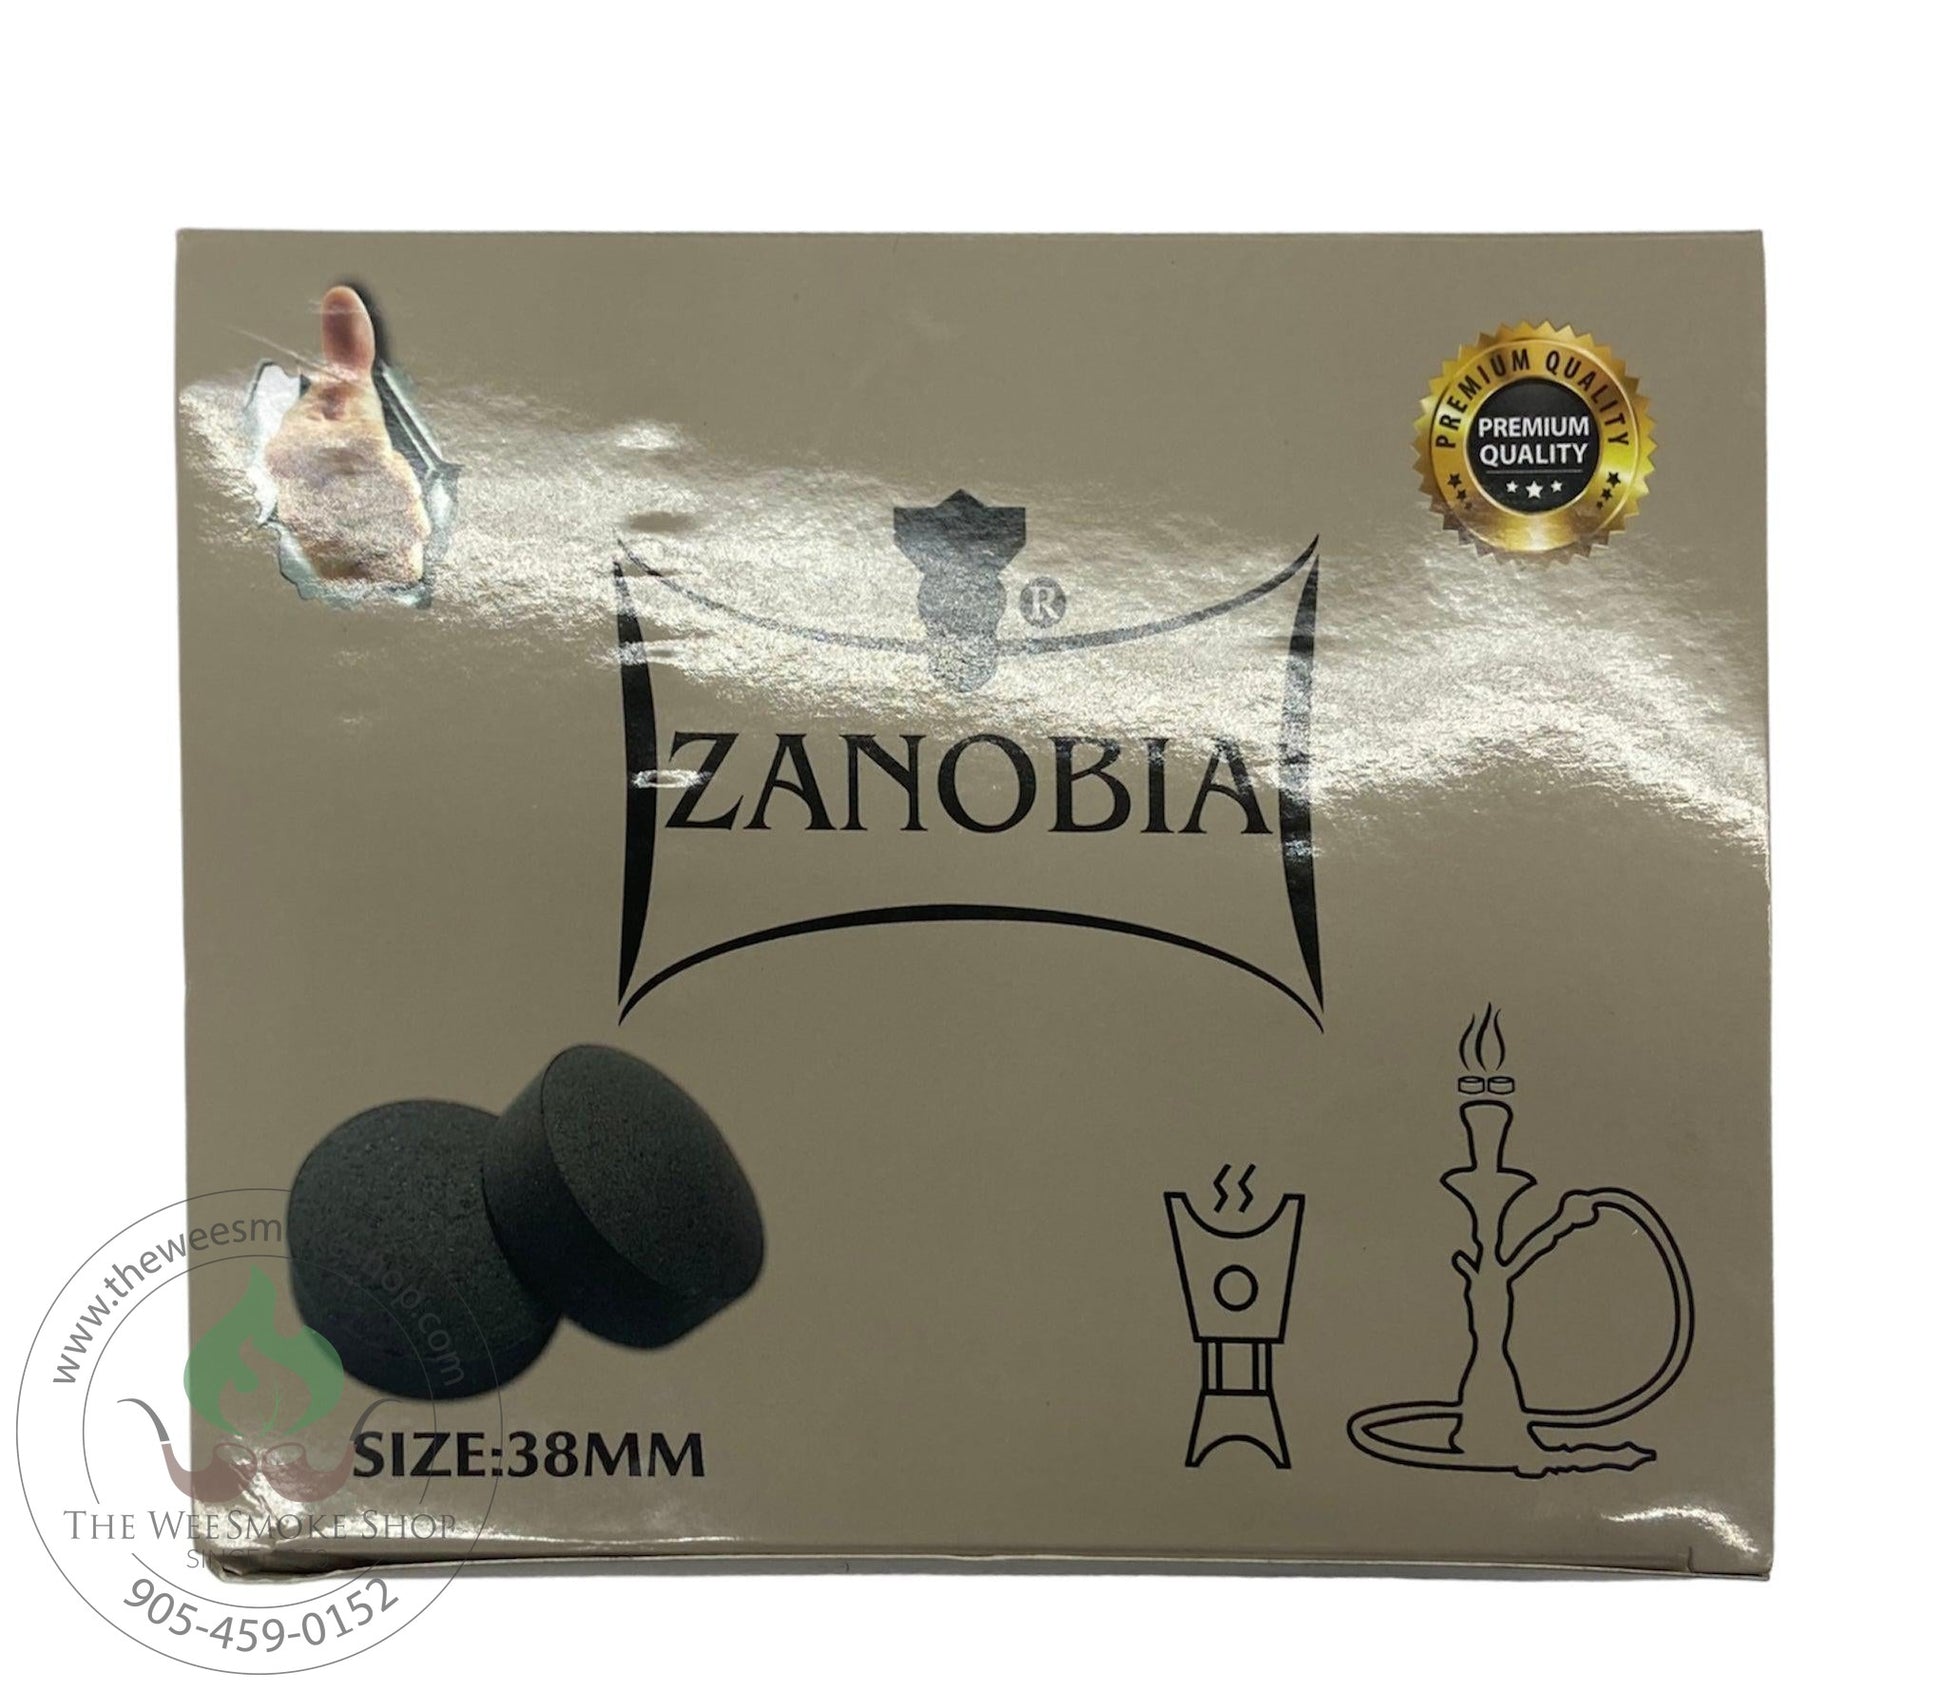 Zanobia Quick Lighting Charcoals (100)-38mm-coals-The Wee Smoke Shop